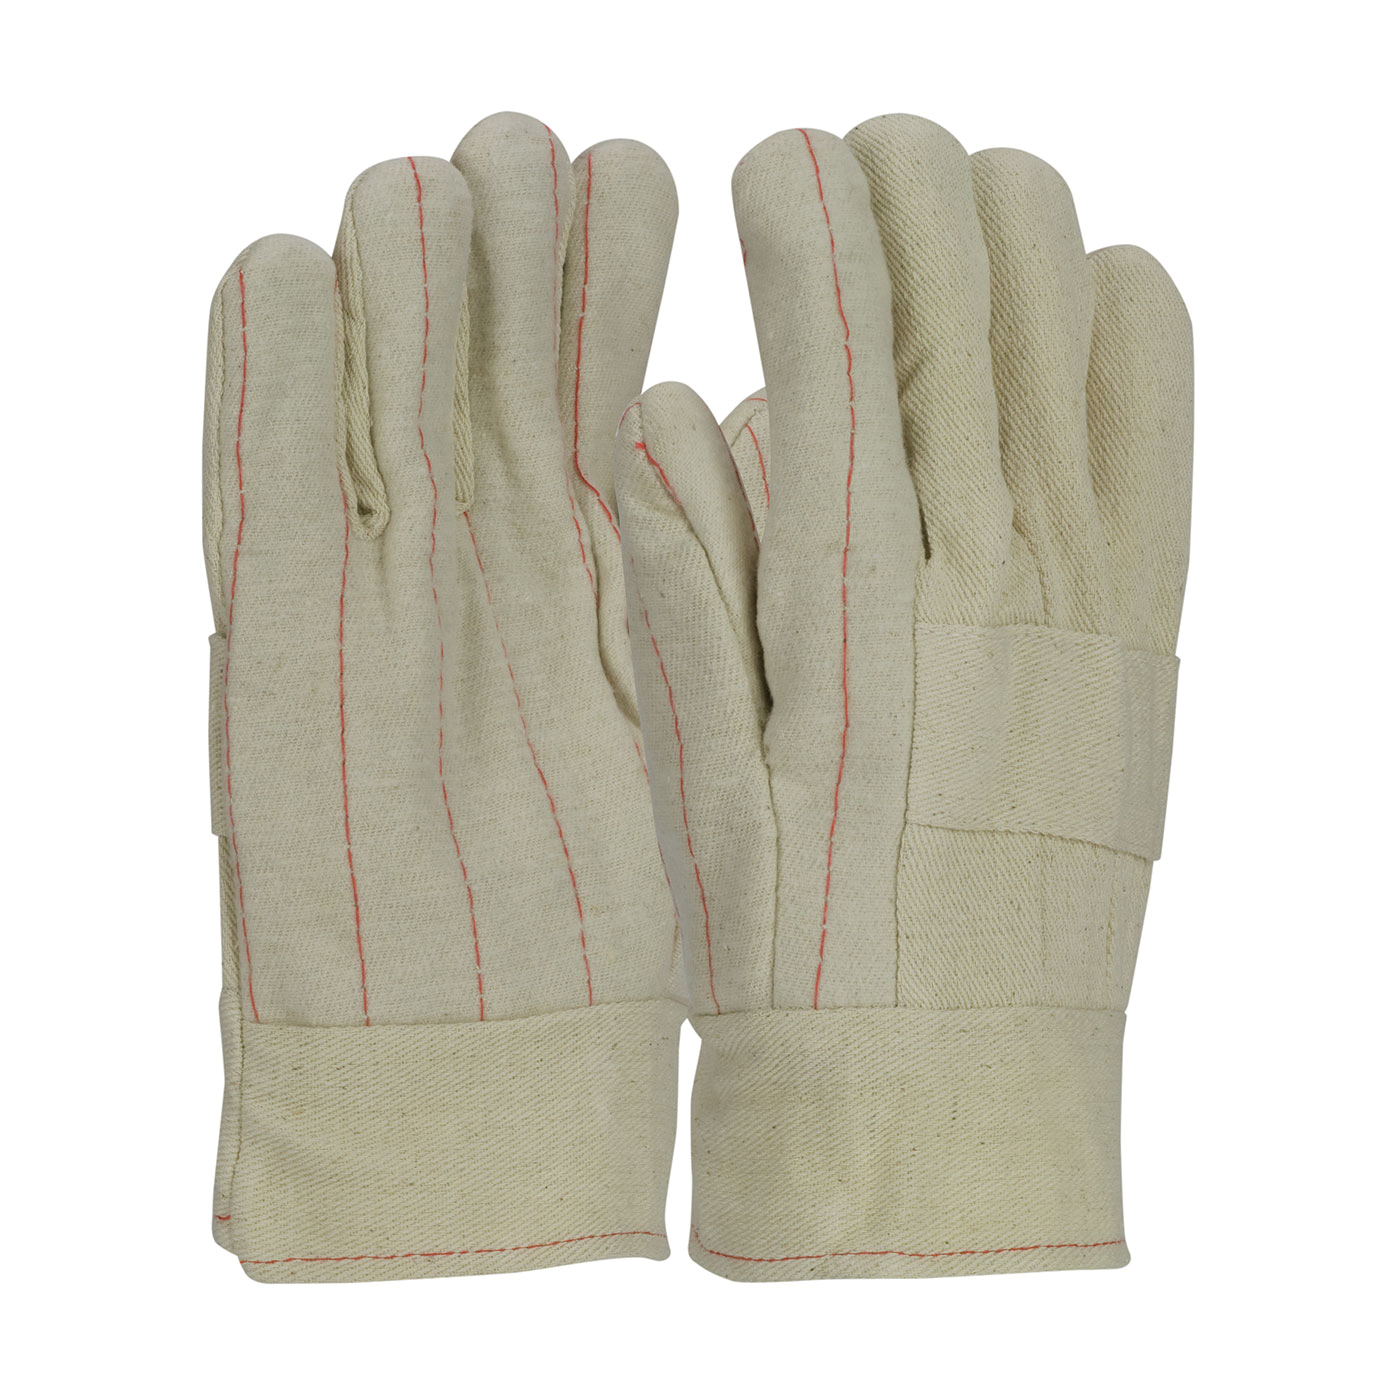 PIP® 94-928I Economy Grade Men's Hot Mill Gloves, L, Cotton/Canvas, Natural, Burlap/Cotton, Open Band Top Cuff, 10.6 in L